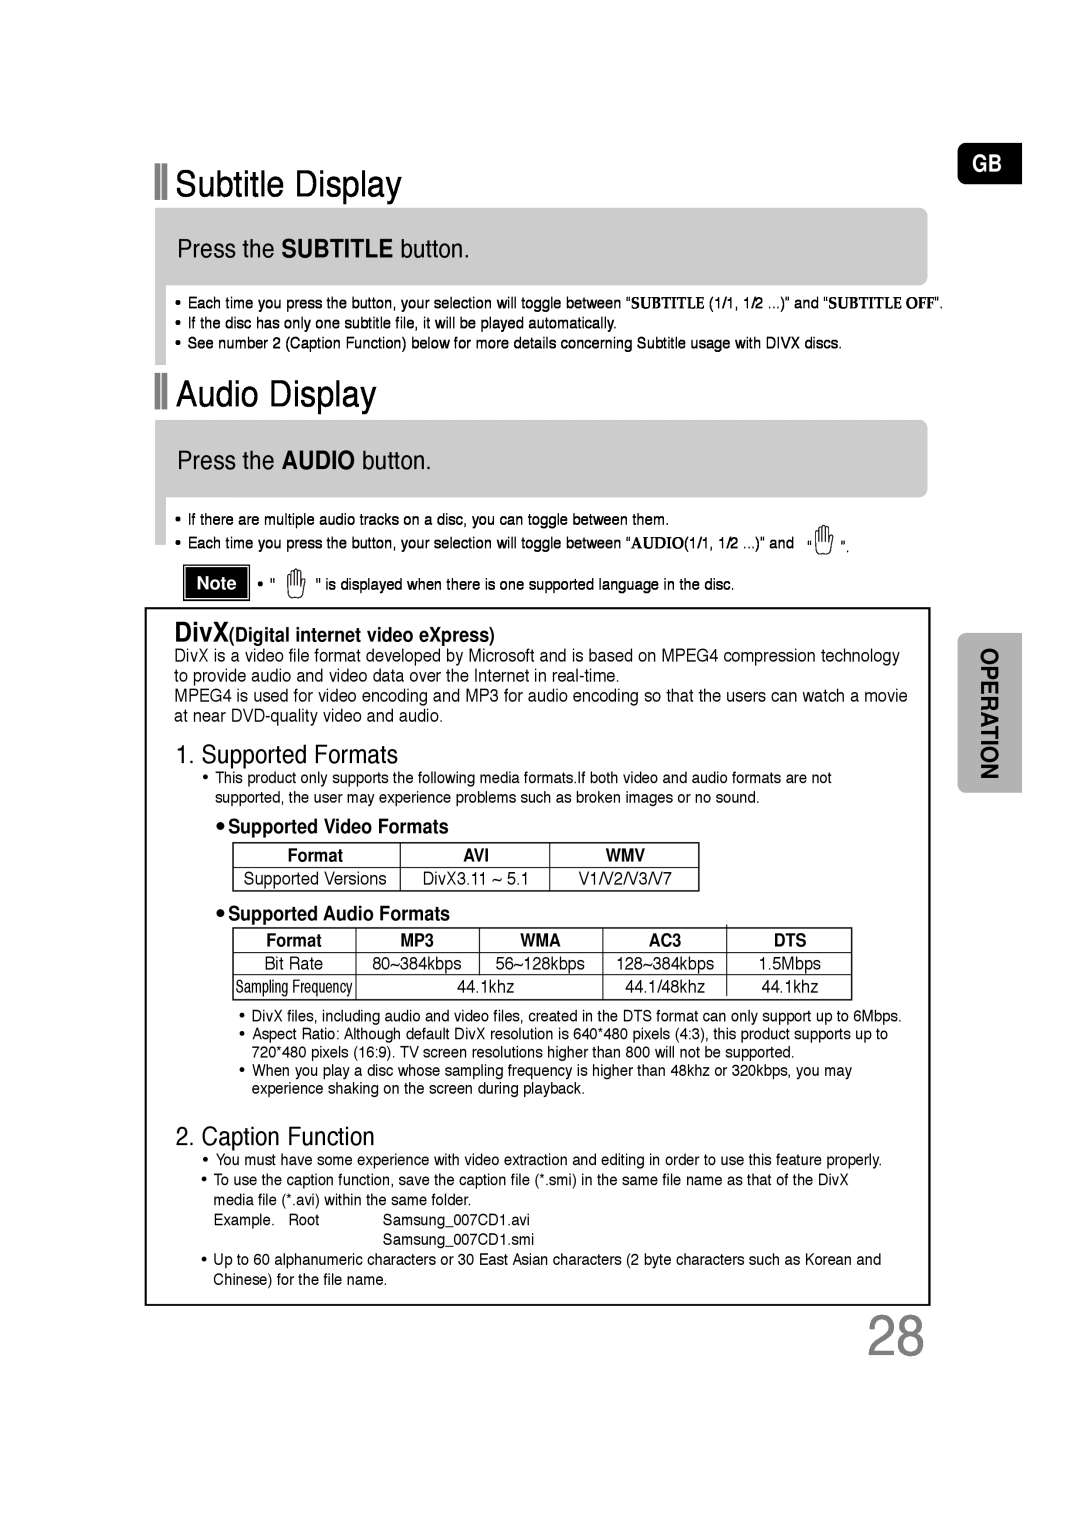 Samsung HT-TQ22 Subtitle Display, Audio Display, Press the SUBTITLE button, Press the AUDIO button, Supported Formats 